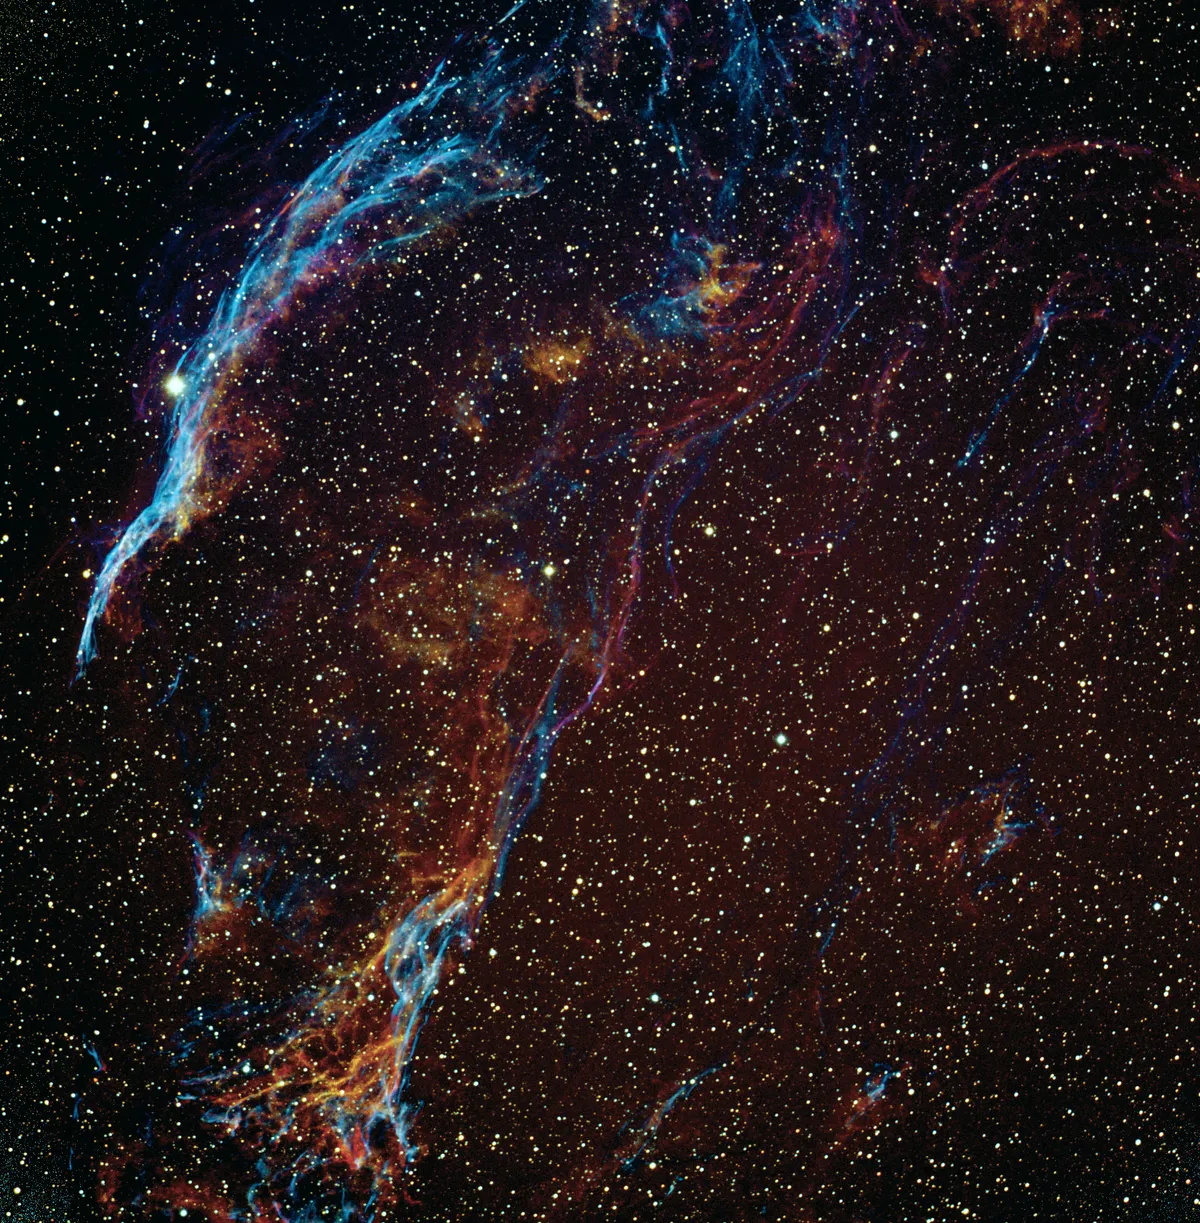 The Veil Nebula Sheila Whysall, Heanor, UK. Equipment: QSI 683 WSG-8 mono CCD camera, Takahashi FSQ 106 refractor, GM1000 mount